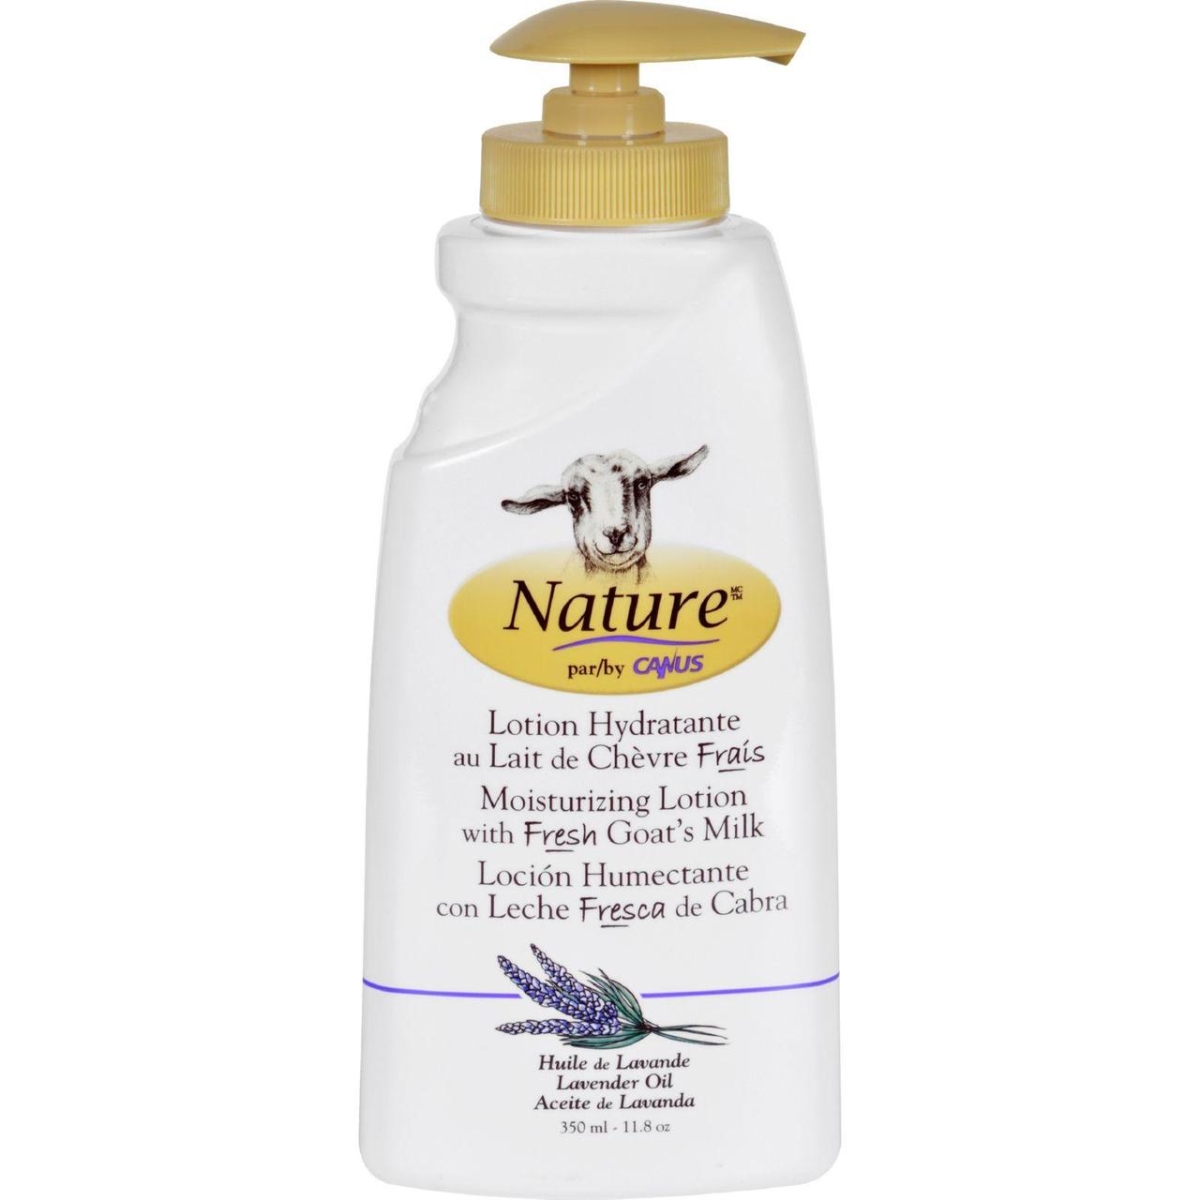 Hg1549740 11.8 Oz Lotion Goats Milk, Nature - Lavender Oil